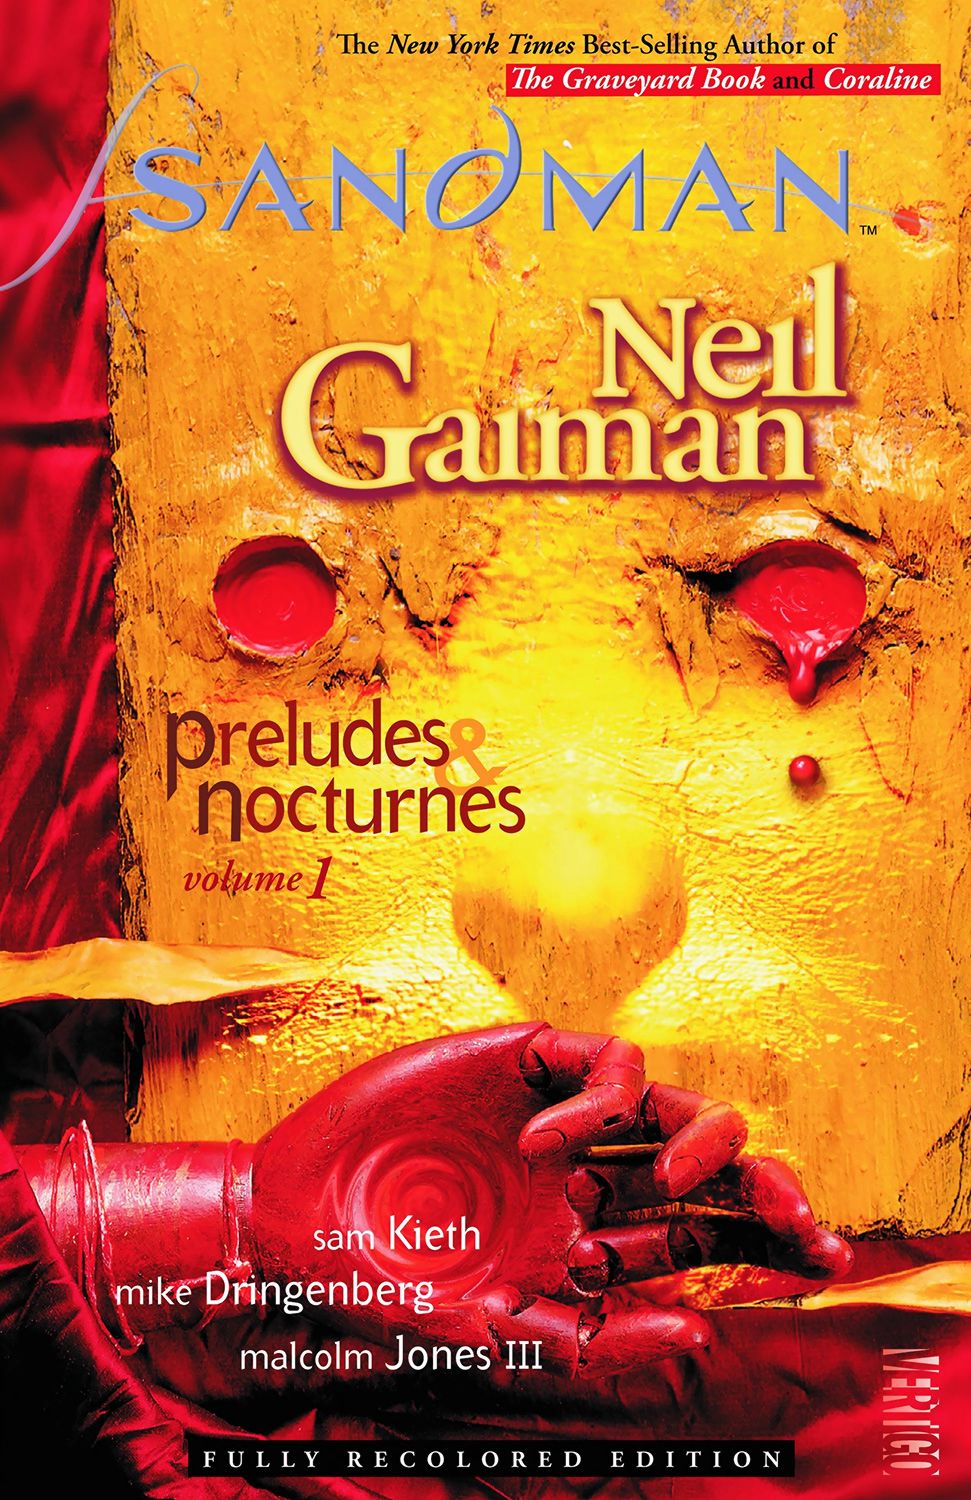 The Sandman, Vol. 9 by Neil Gaiman